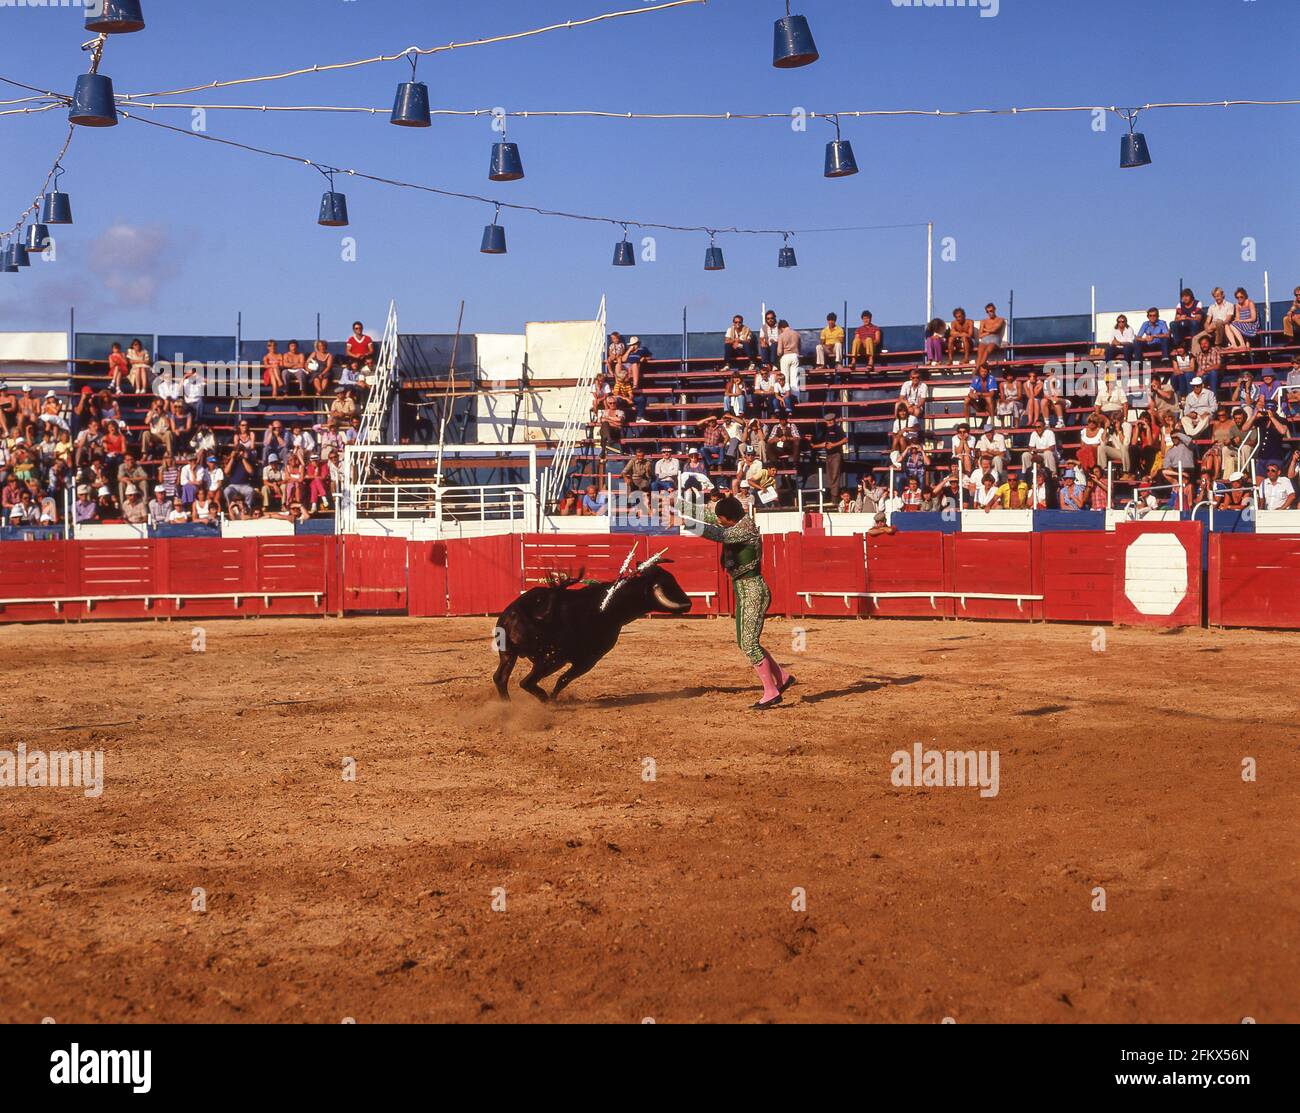 Cavaleiro and bull in bullring, Povoa de Varzim Bullfighting Arena, Povoa de Varzim, Porto (Oporto), Norte Region, Portugal Stock Photo